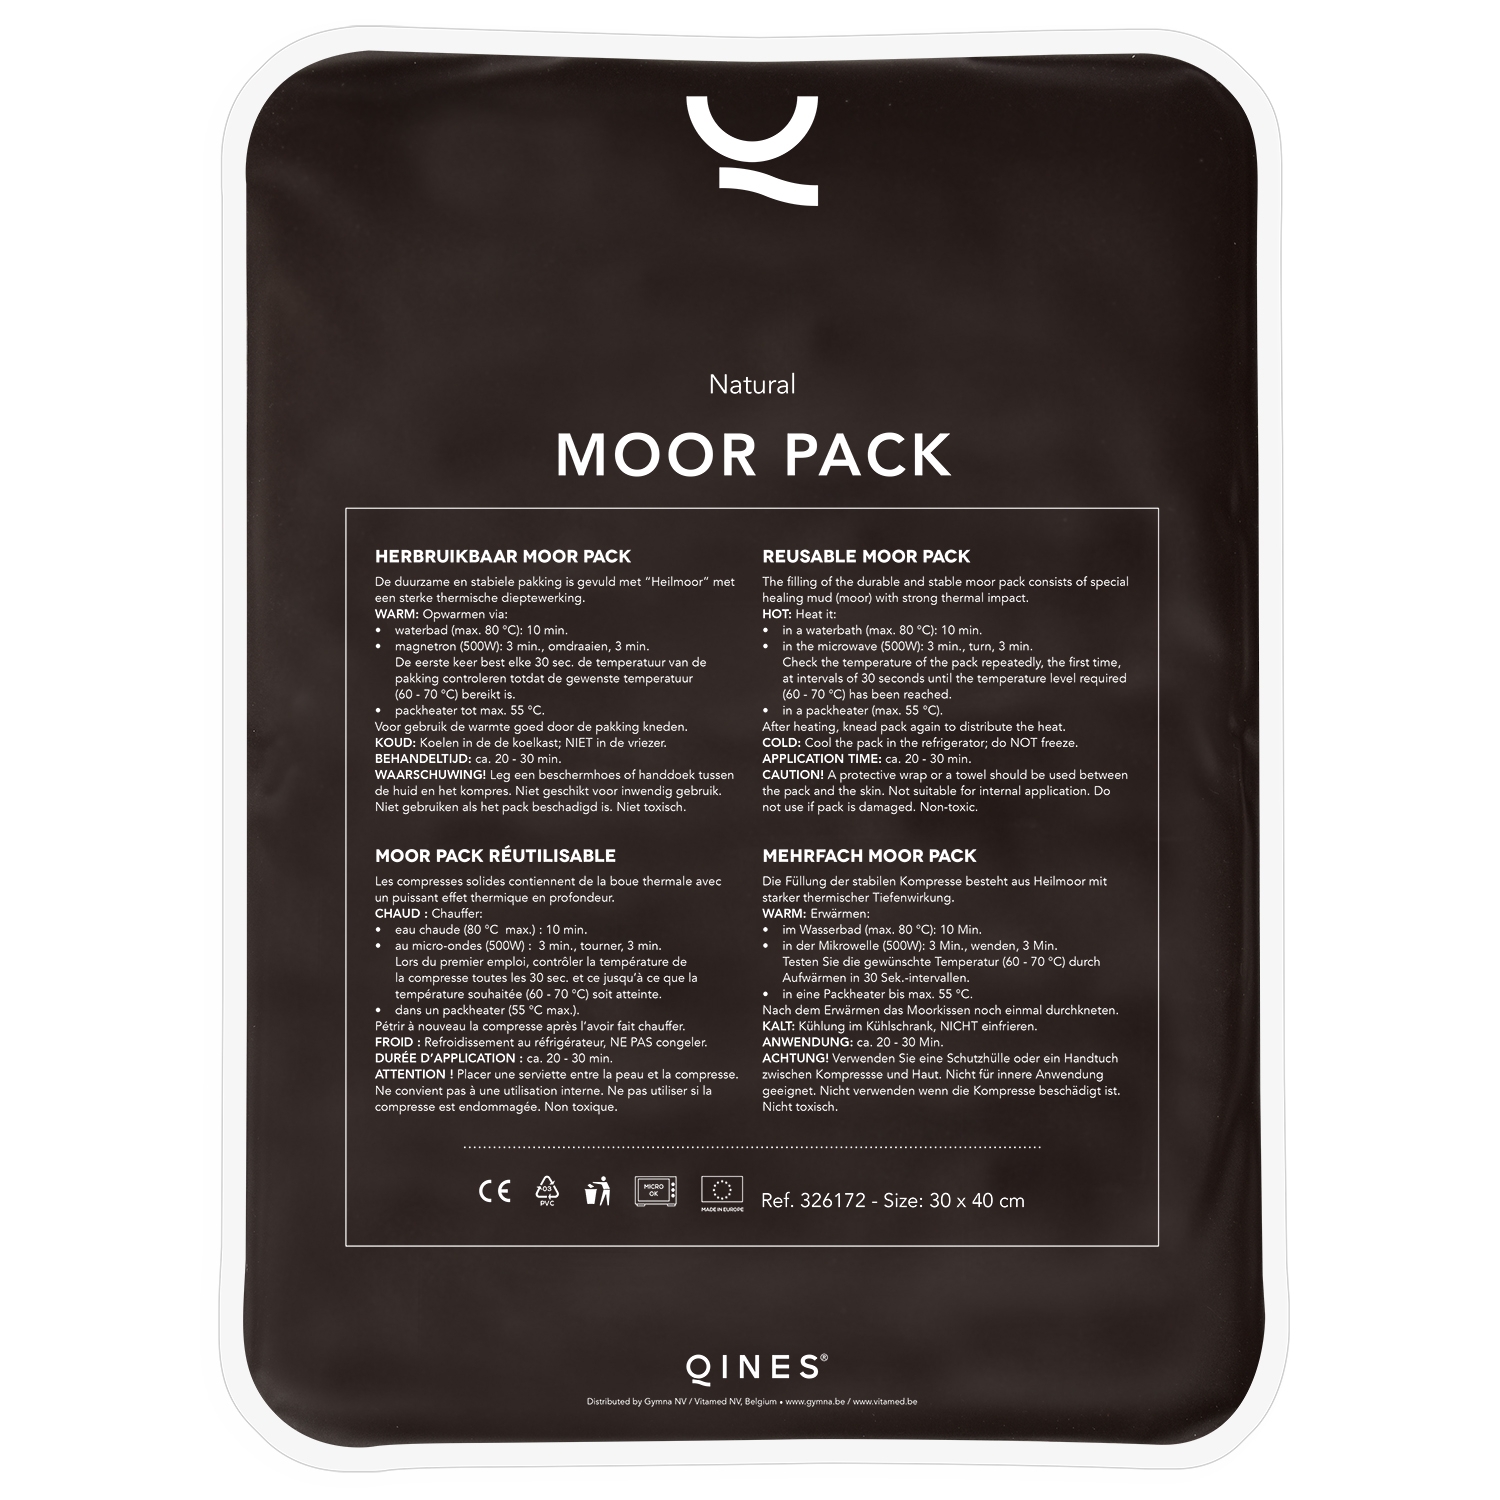 Moor Pack - Qines - 30 x 40 cm